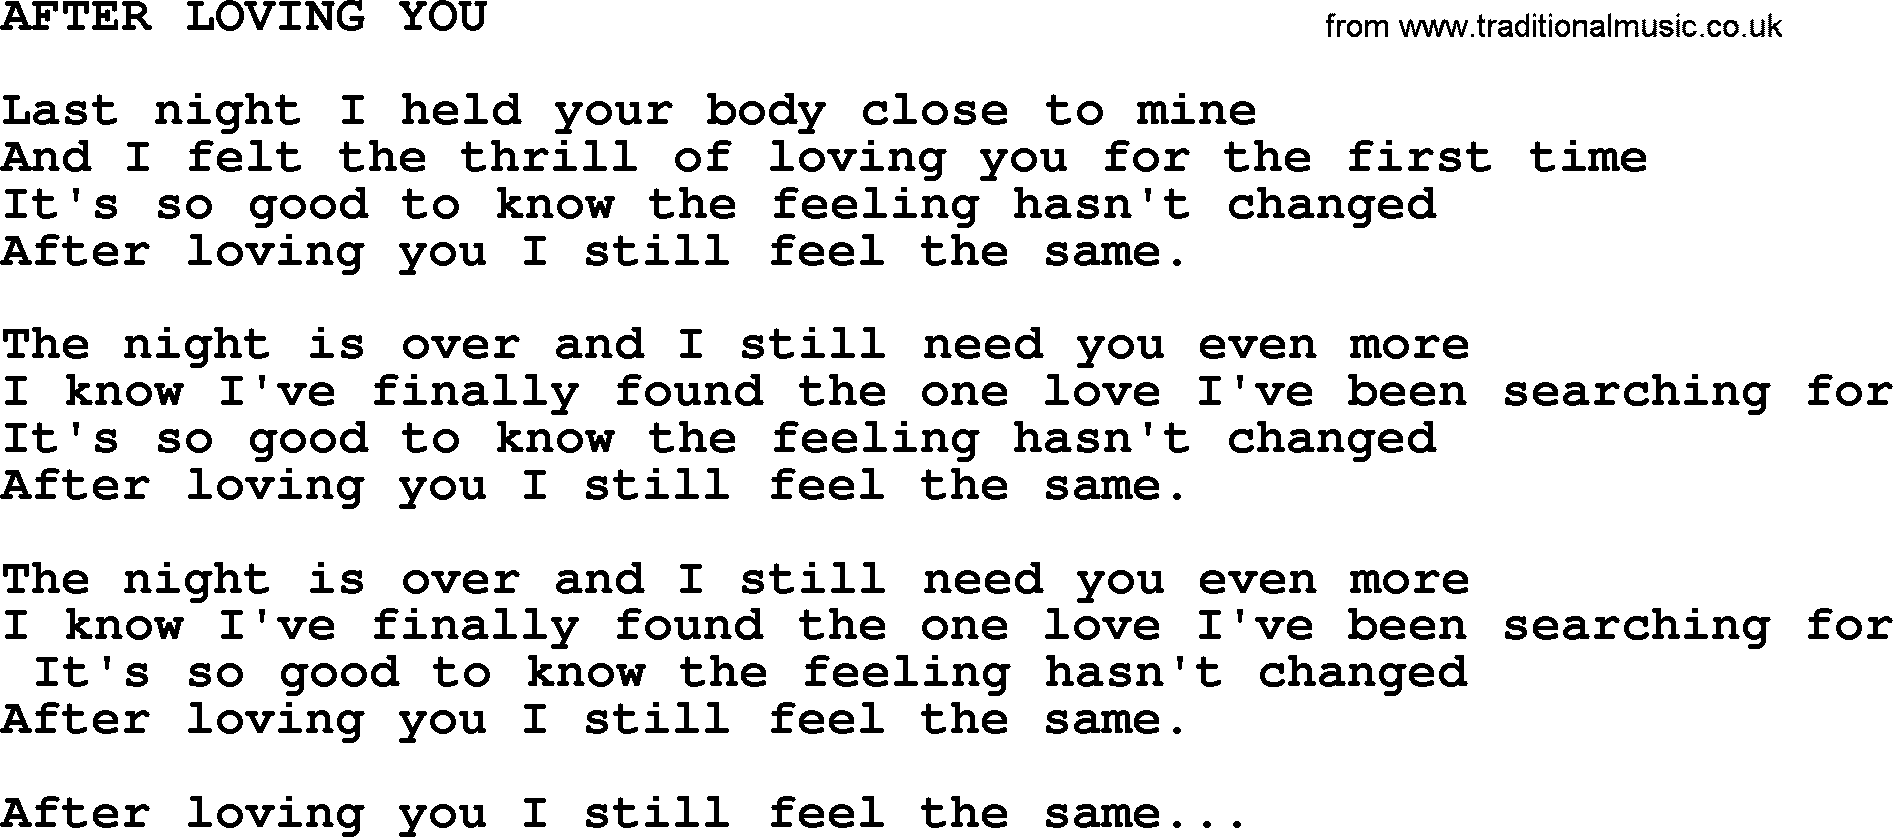 Merle Haggard song: After Loving You, lyrics.